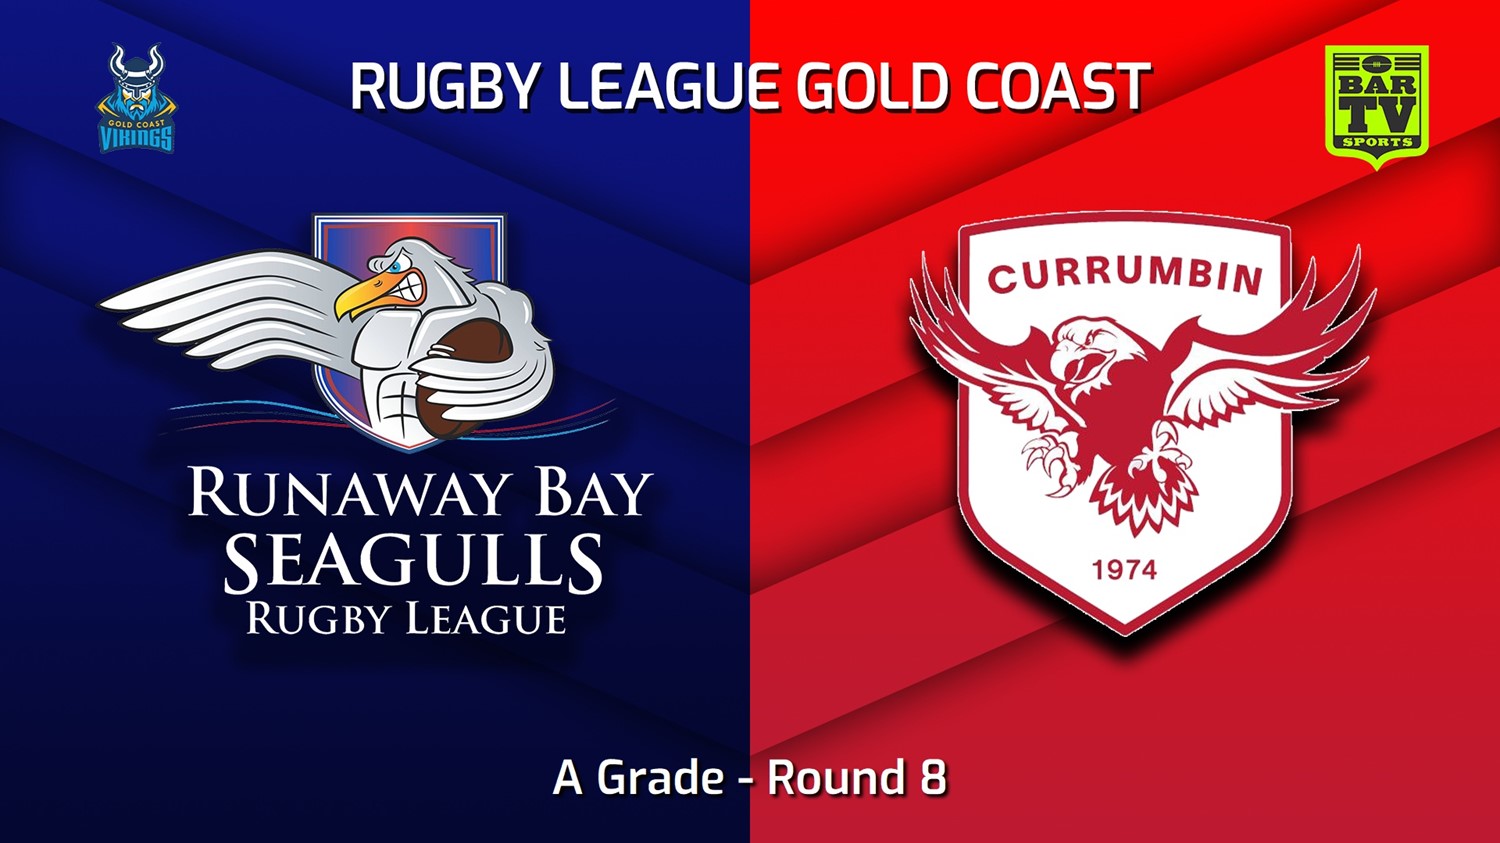 230618-Gold Coast Round 8 - A Grade - Runaway Bay Seagulls v Currumbin Eagles Minigame Slate Image